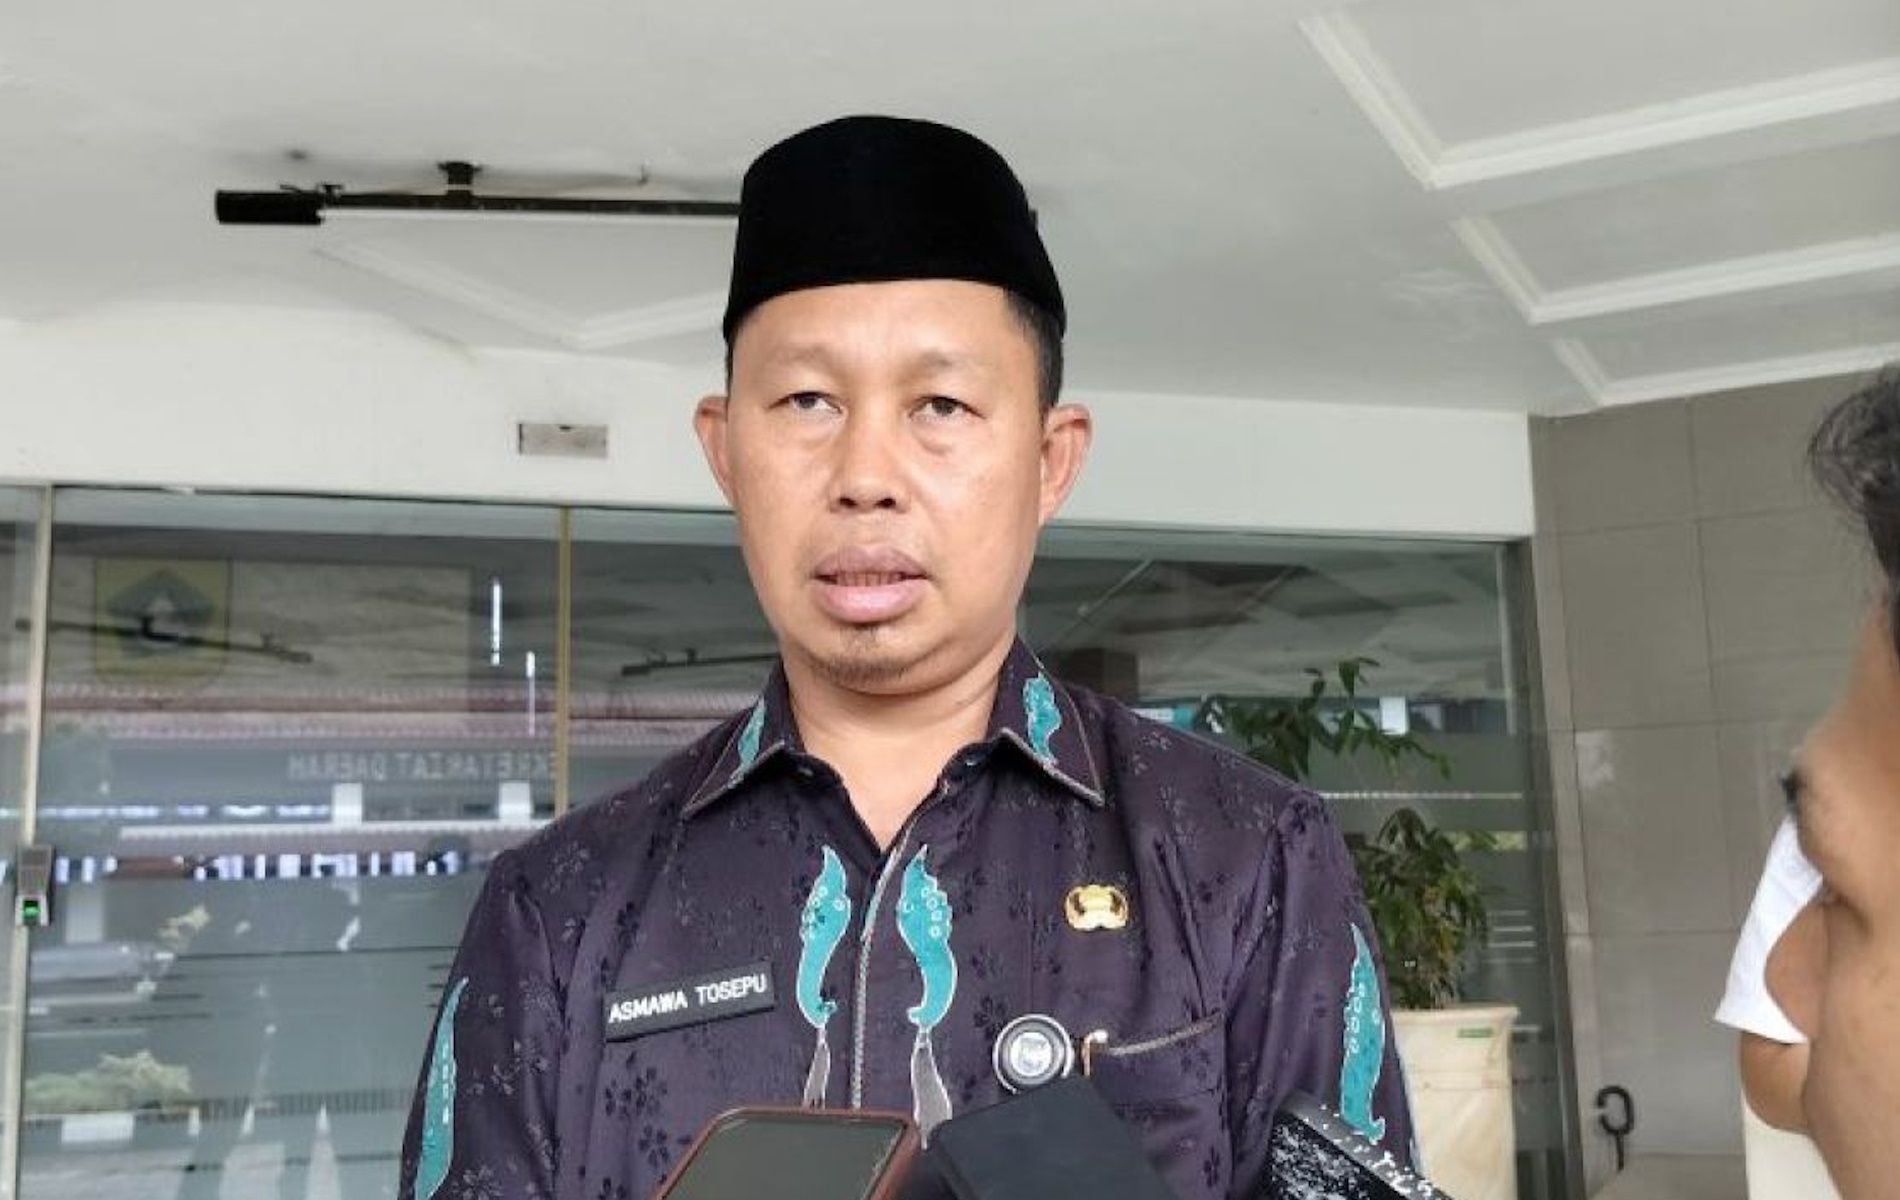 Penjabat Bupati Bogor Asmawa Tosepu di Cibinong, Kabupaten Bogor, Jawa Barat.